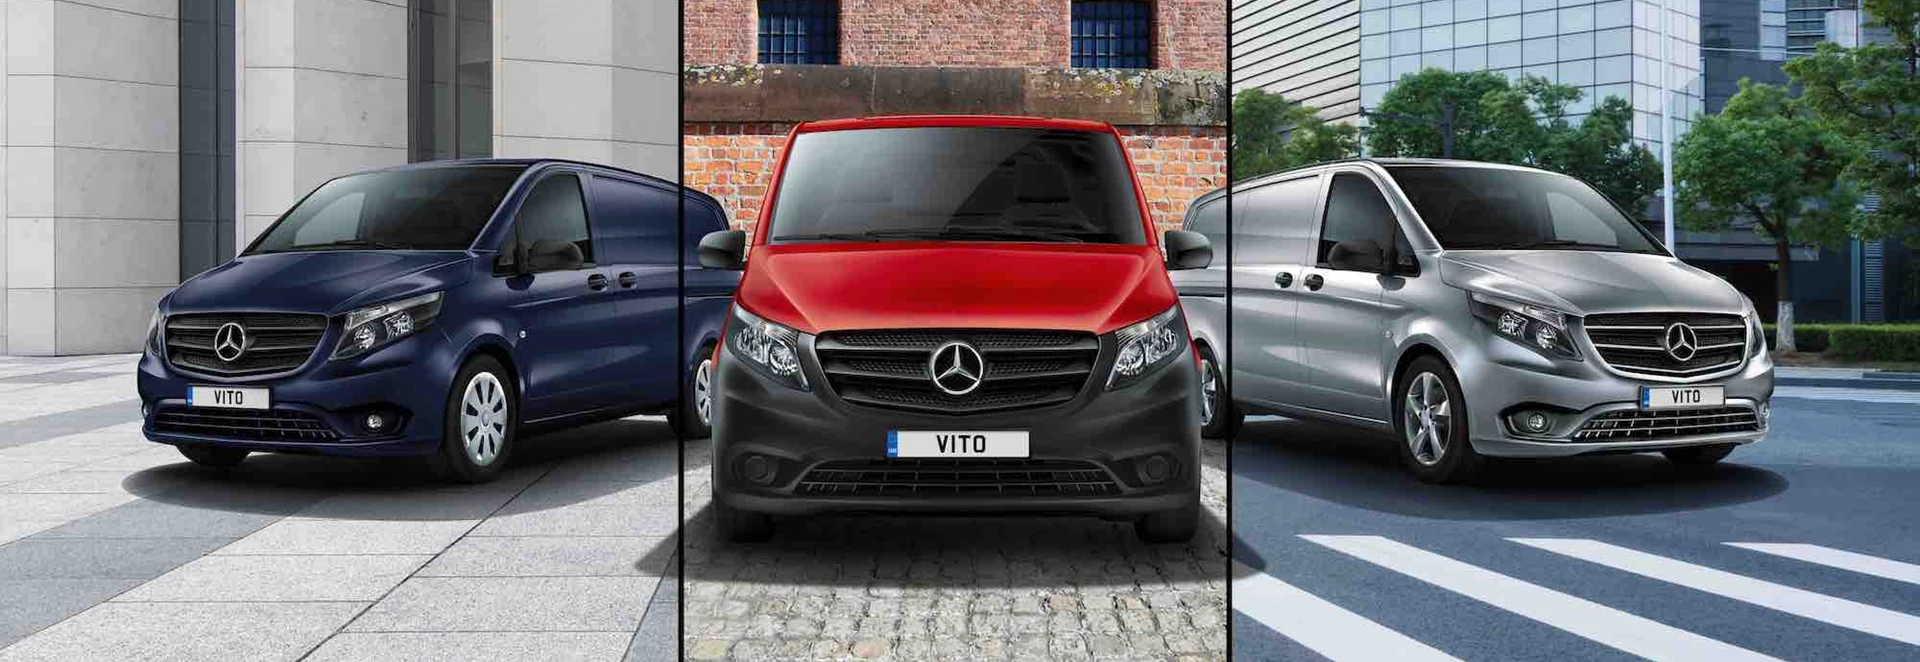 Mercedes-Benz announces new trims for Vito